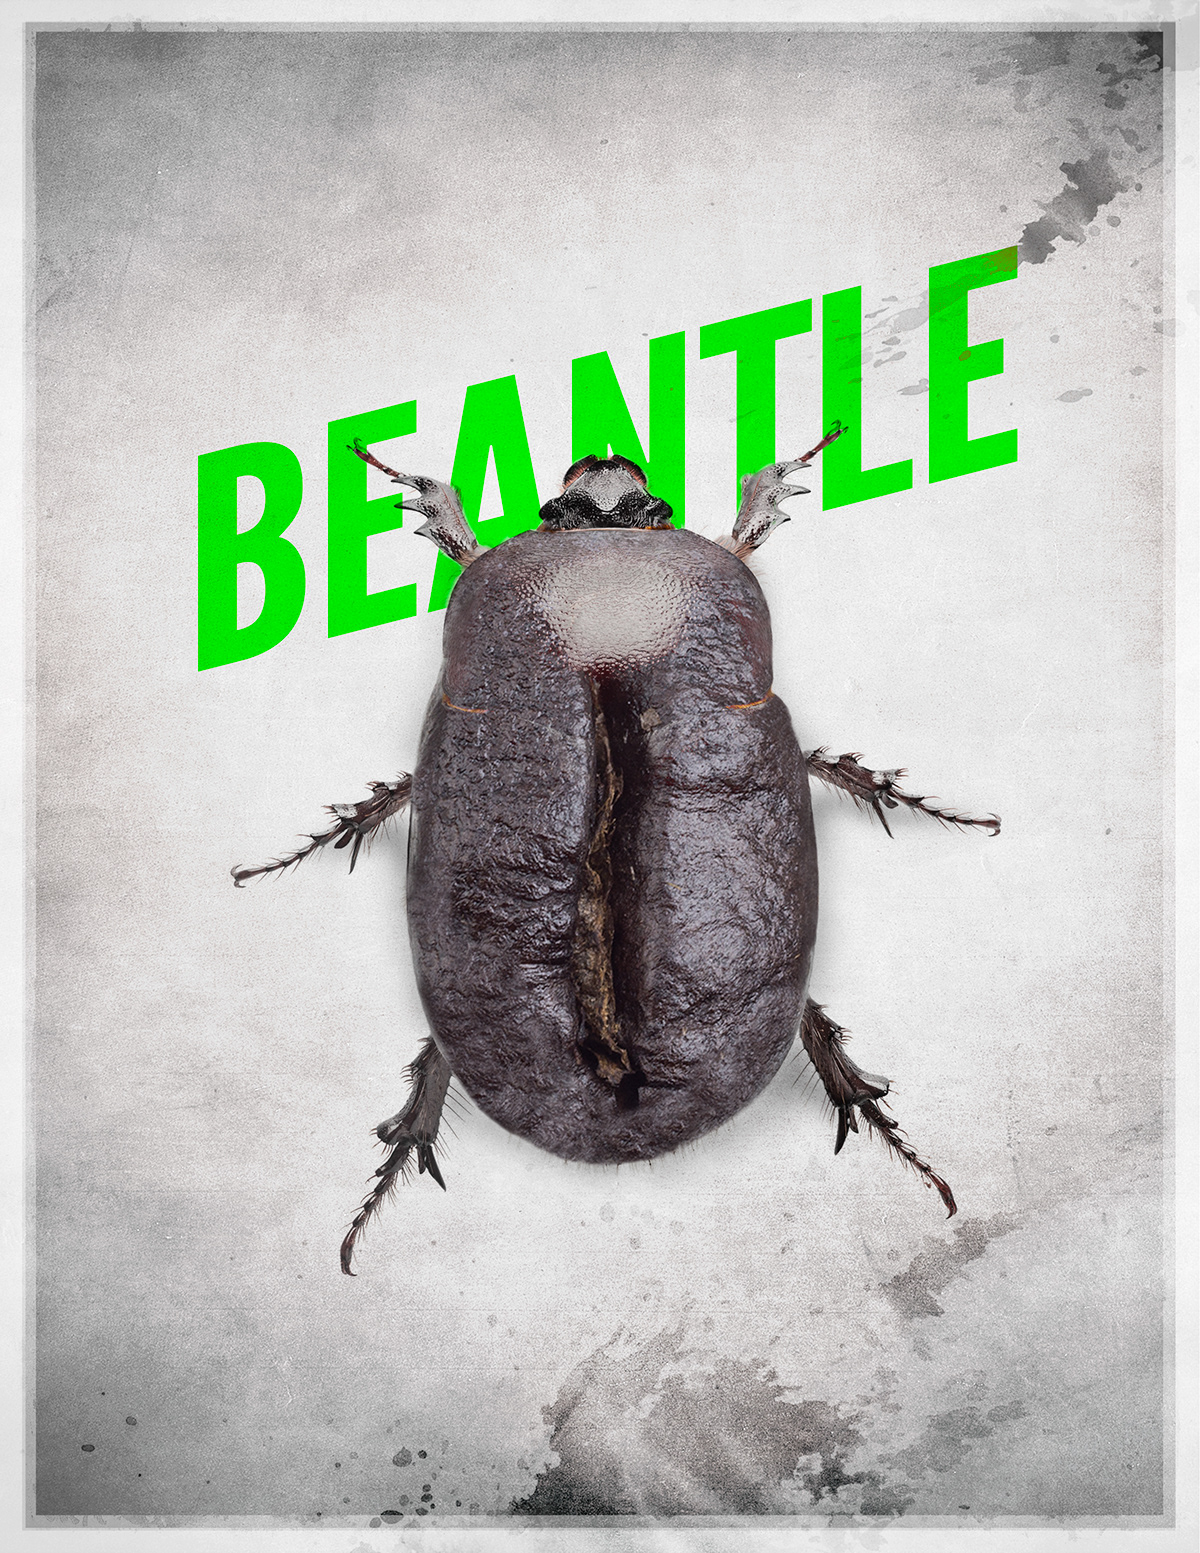 Coffee  bugs  beetles  abstract  graphic design Digital Art  art creative conceptual Unique